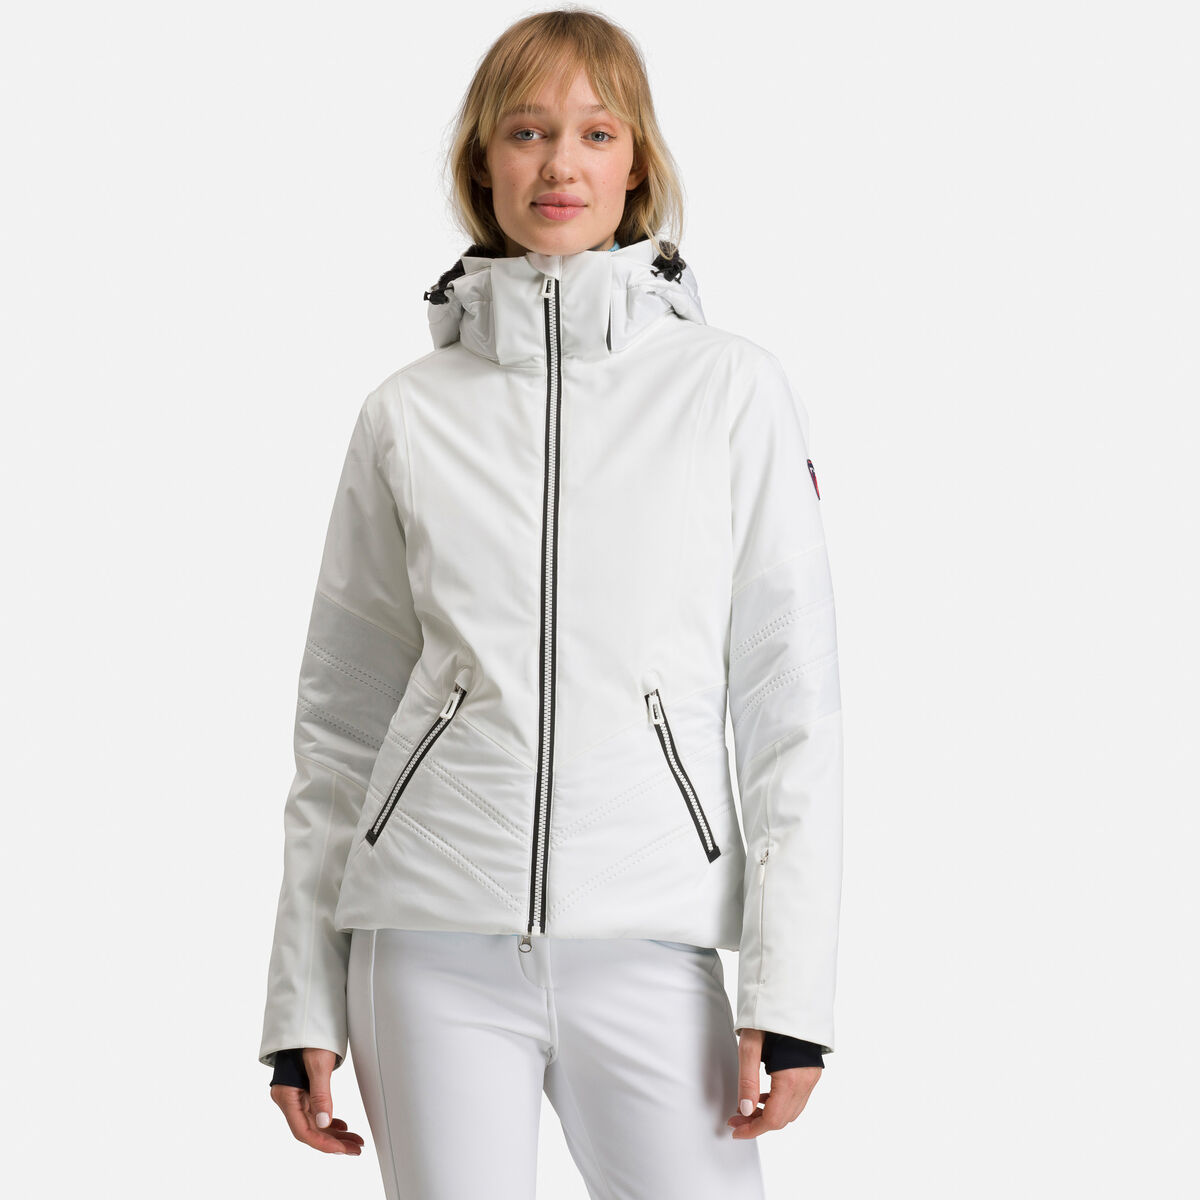 Women's Glamorize IV Ski Jacket - White